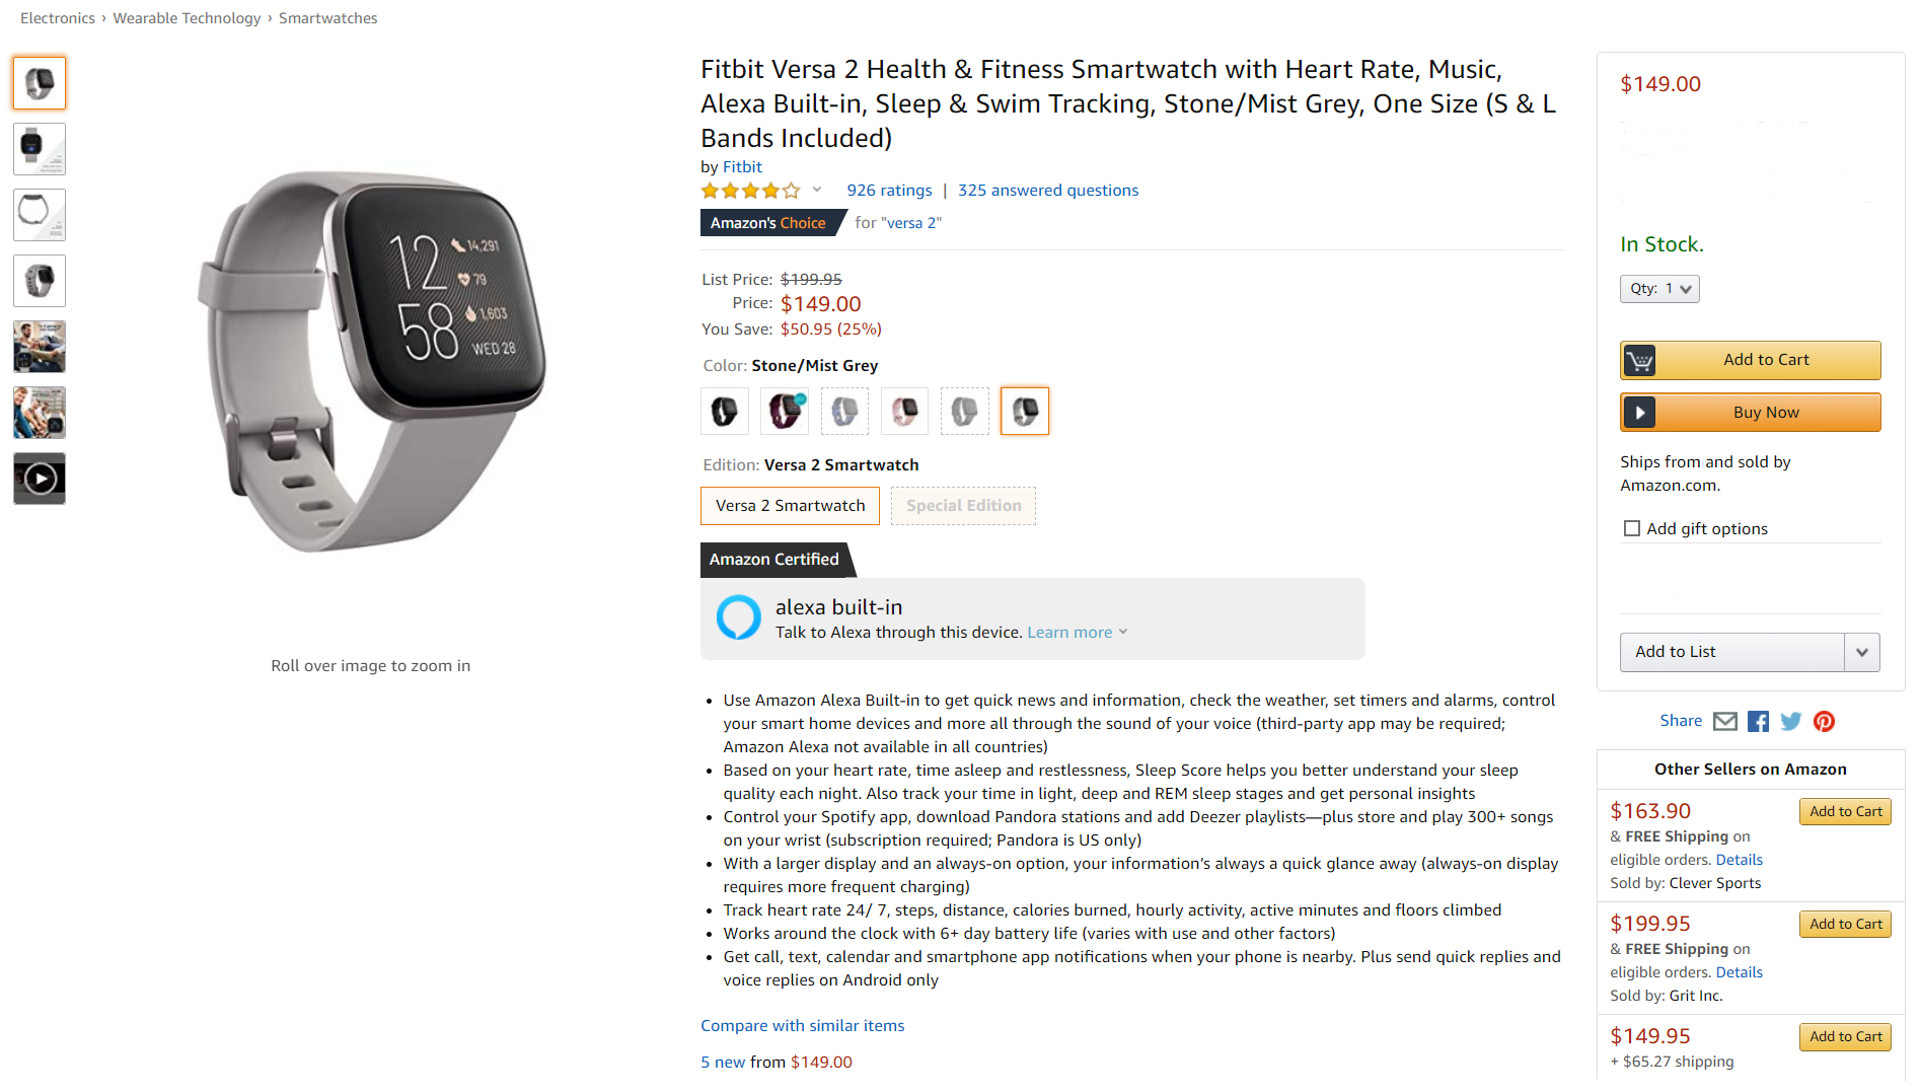 The Fitbit Versa 2 on Amazon.